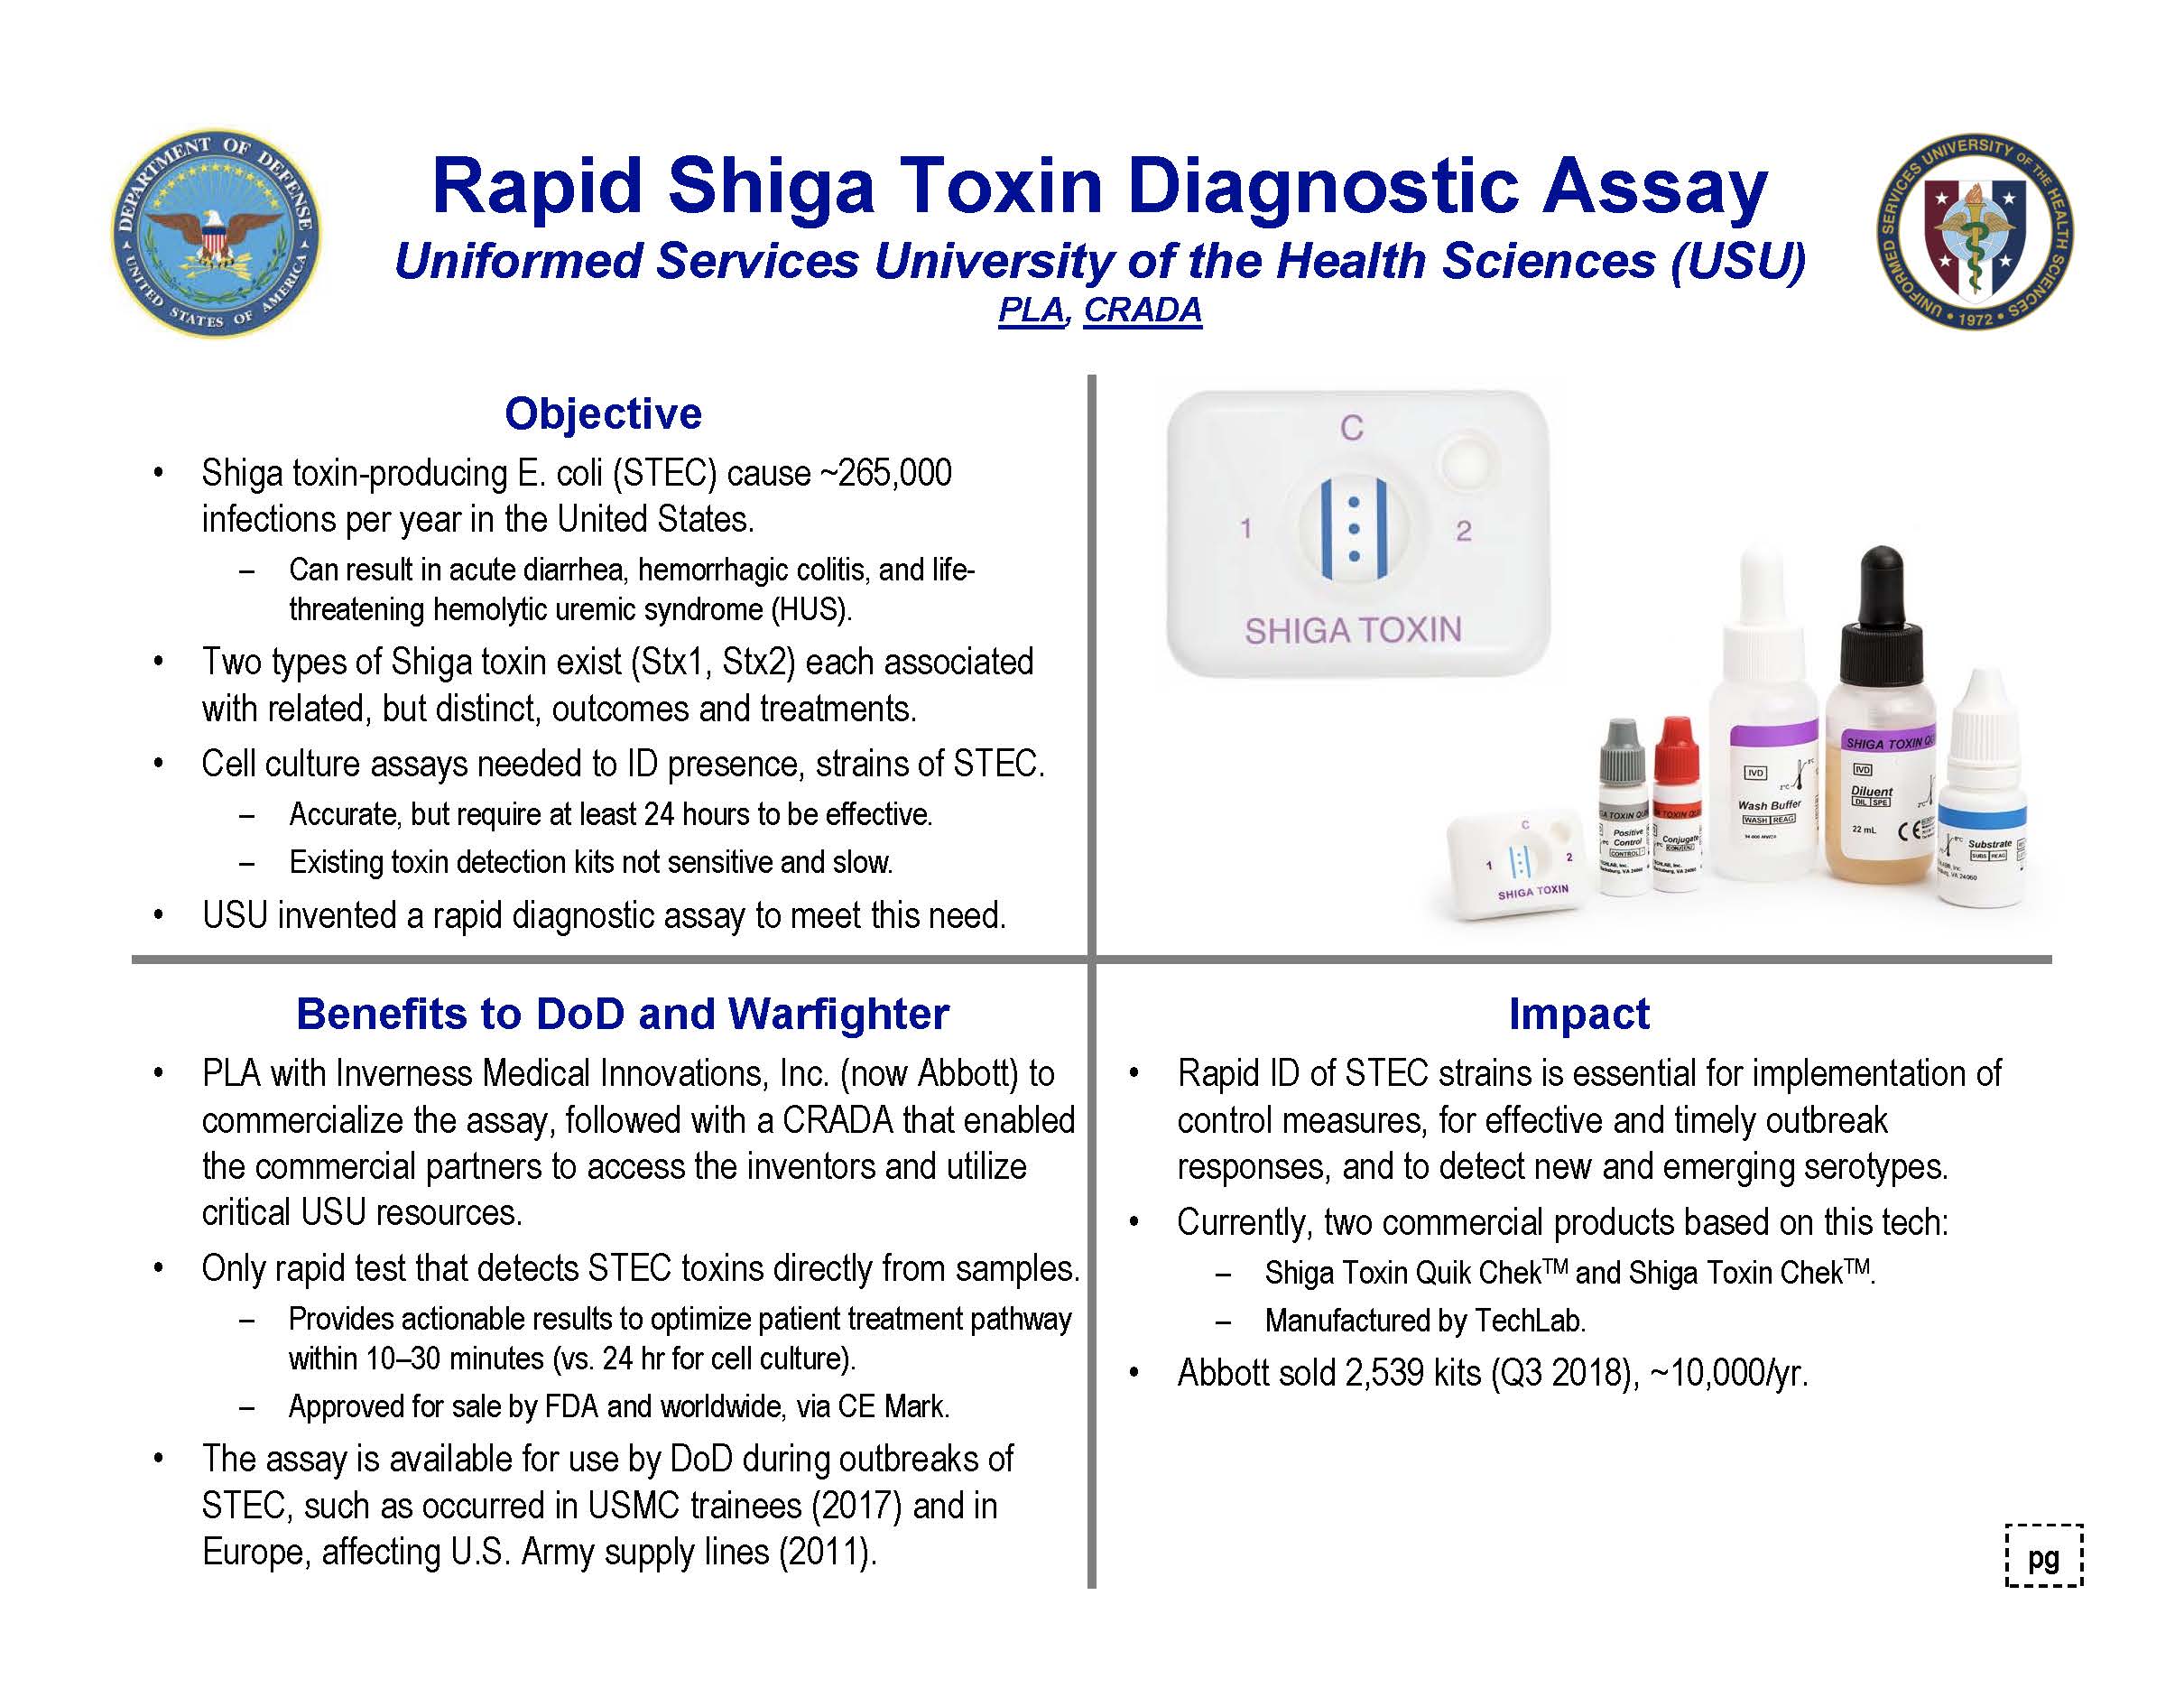 Four quadrant explanation of Shiga Toxin Diagnostic Assay